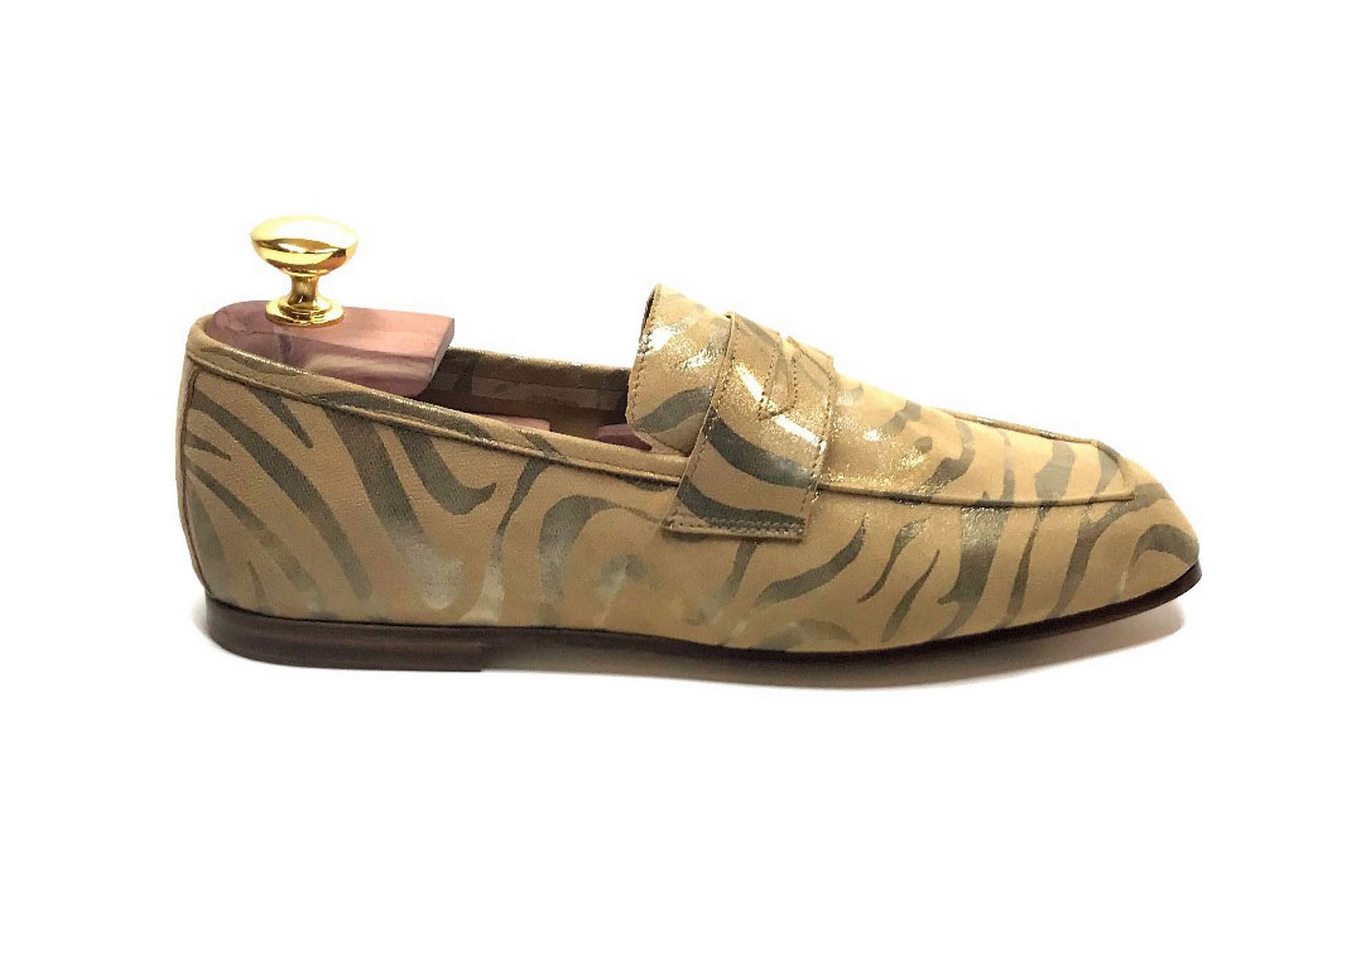 Loafers 'Tasca' in calfskin silkscreened Tucson Camel™